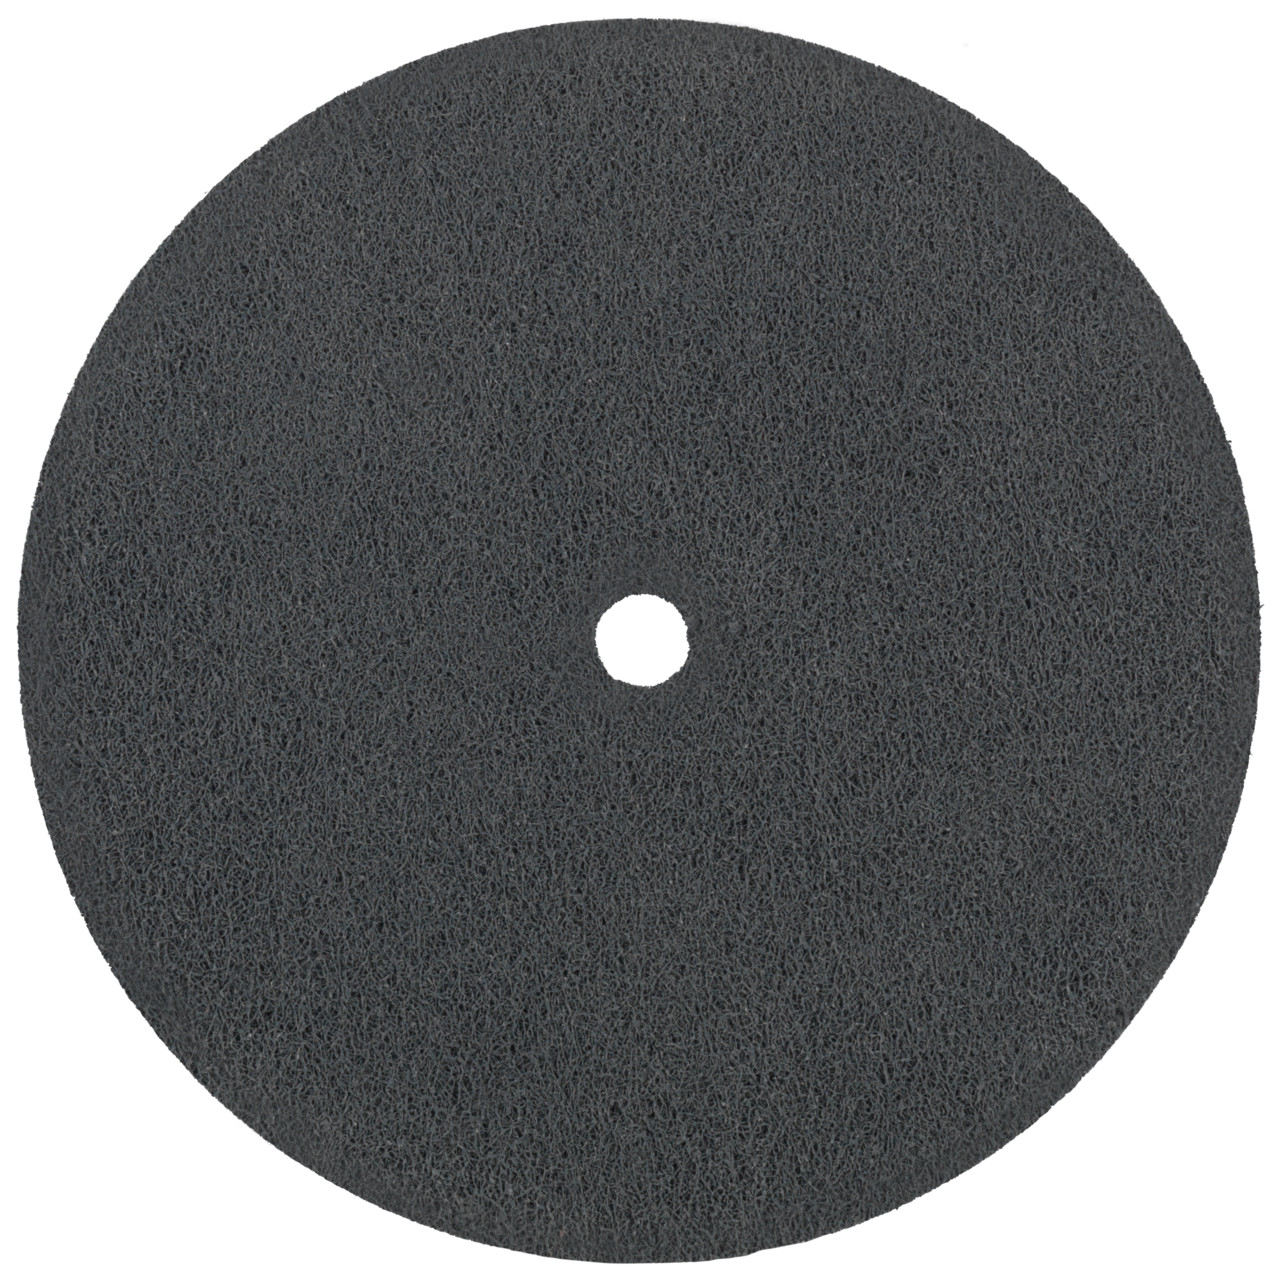 Tyrolit Discos compactos prensados DxDxH 152x25x25,4 Inserto universal, 2 A MEDIO, forma: 1, Art. 34190304